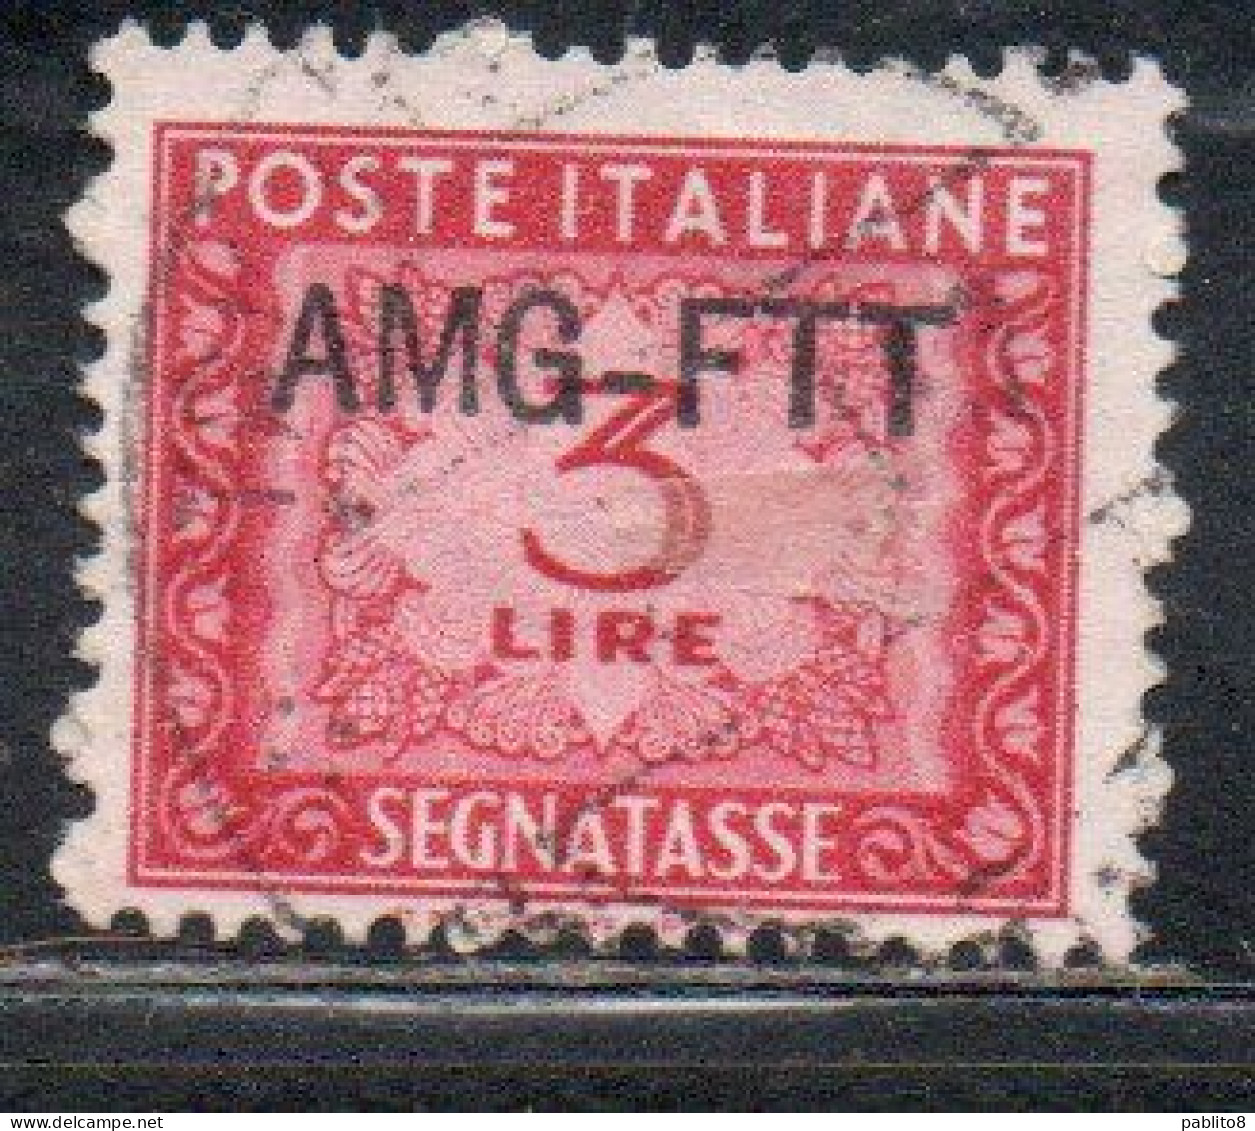 TRIESTE A 1949 1954AMG-FTT SOPRASTAMPATO D'ITALIA ITALY OVERPRINTED SEGNATASSE POSTAGE DUE TAXES TASSE LIRE 3 USATO USED - Postage Due